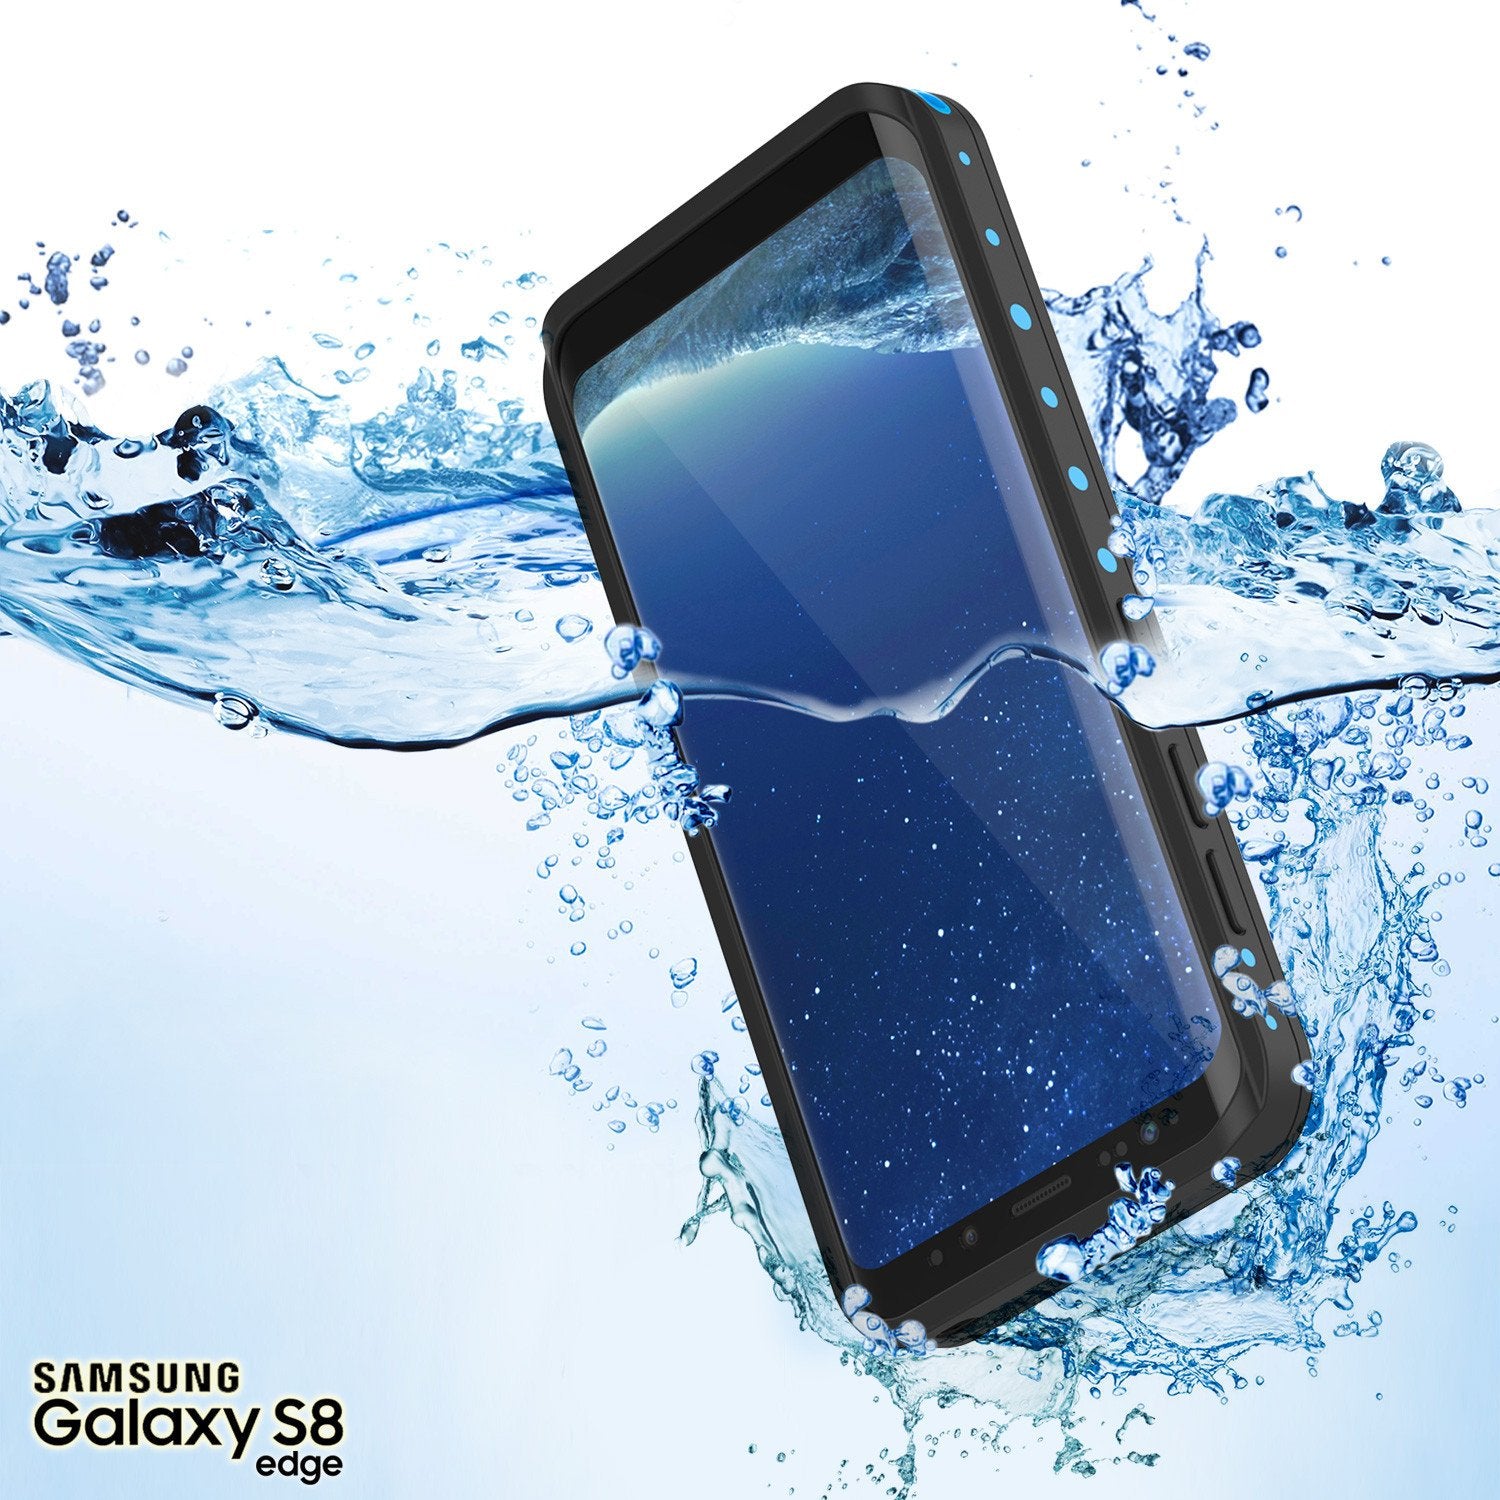 Galaxy S8 Waterproof Case PunkCase StudStar Light Blue Thin 6.6ft Underwater IP68 ShockProof - PunkCase NZ